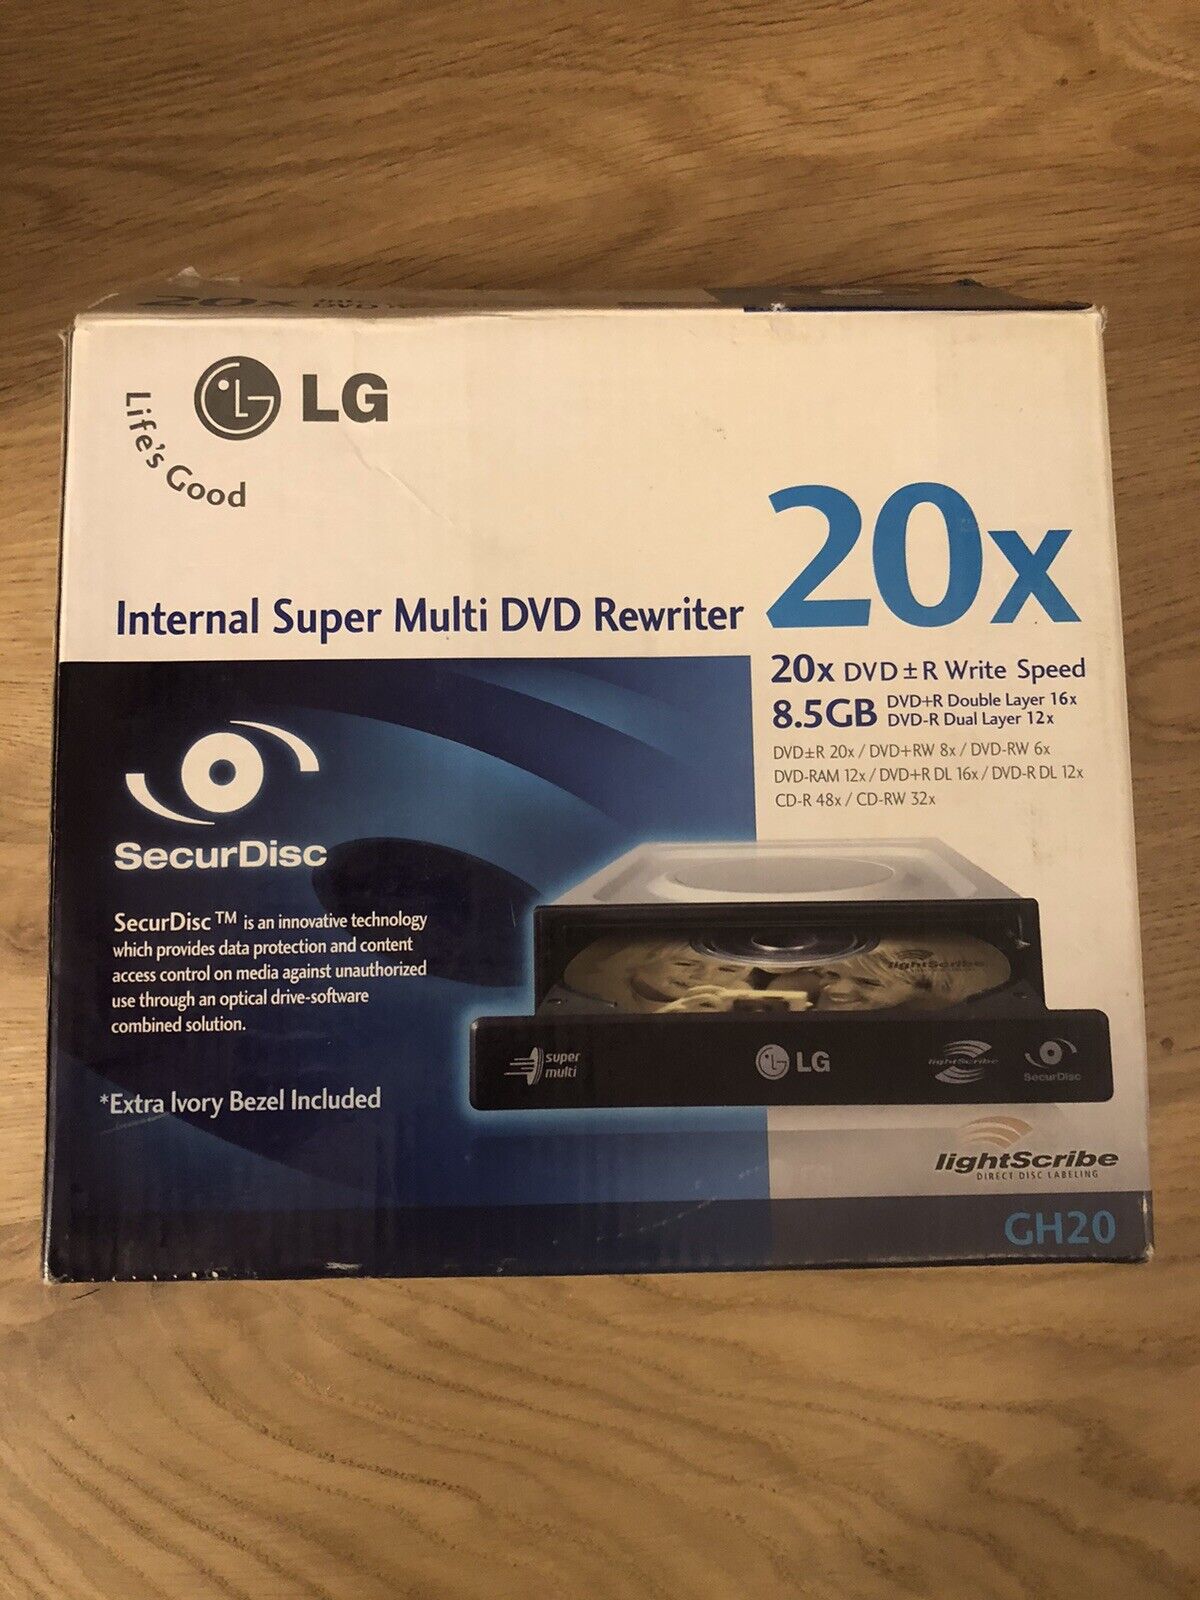 2 - LG 20x GH20 Internal Super Multi DVD Rewriter’s